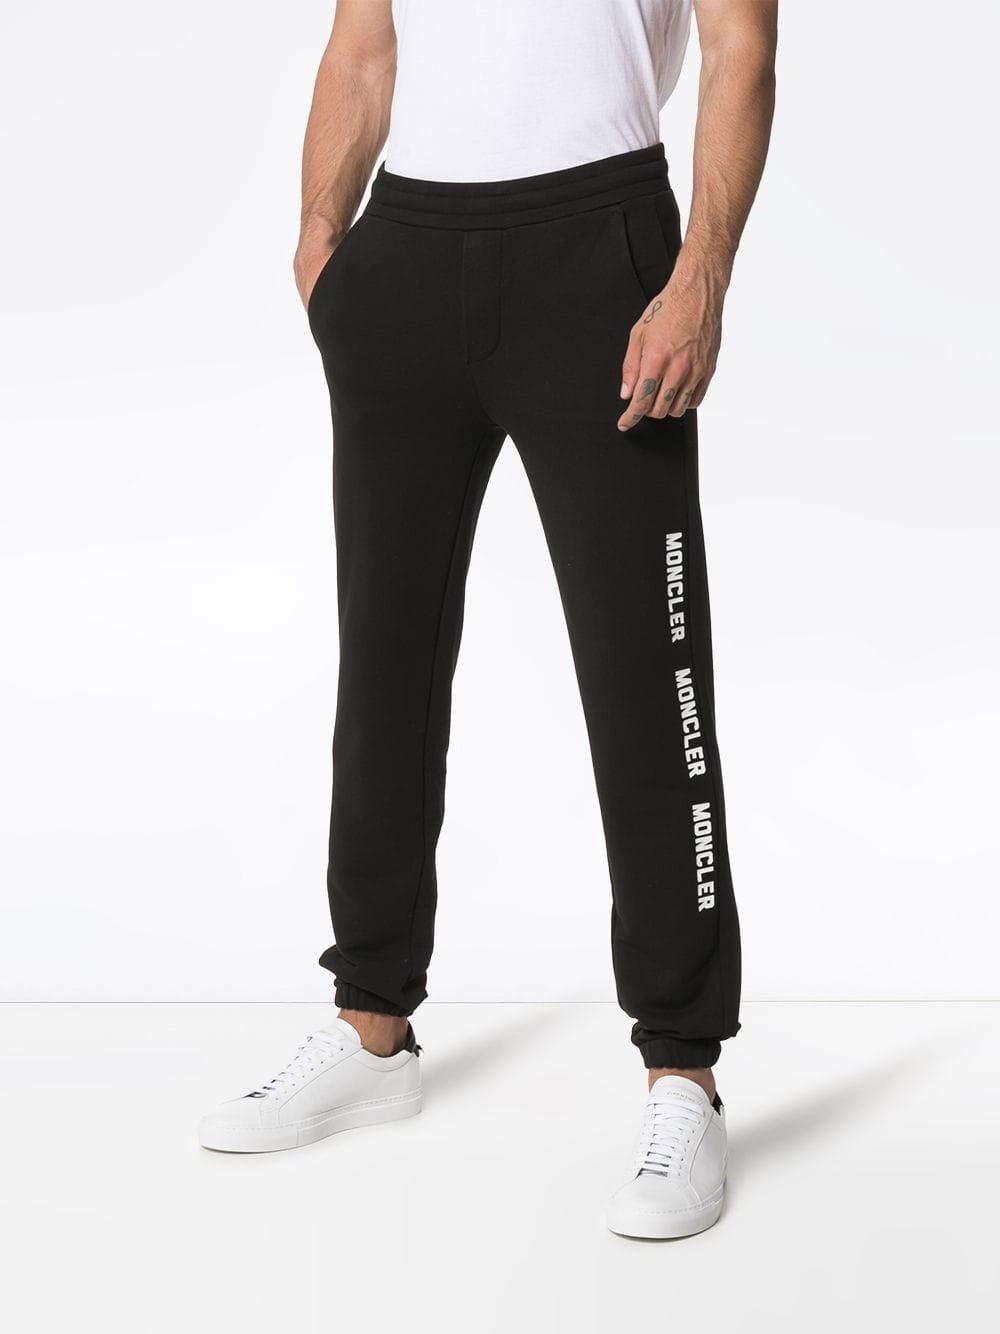 Moncler Triple Logo Sweatpants in Black for Men - Save 30% - Lyst